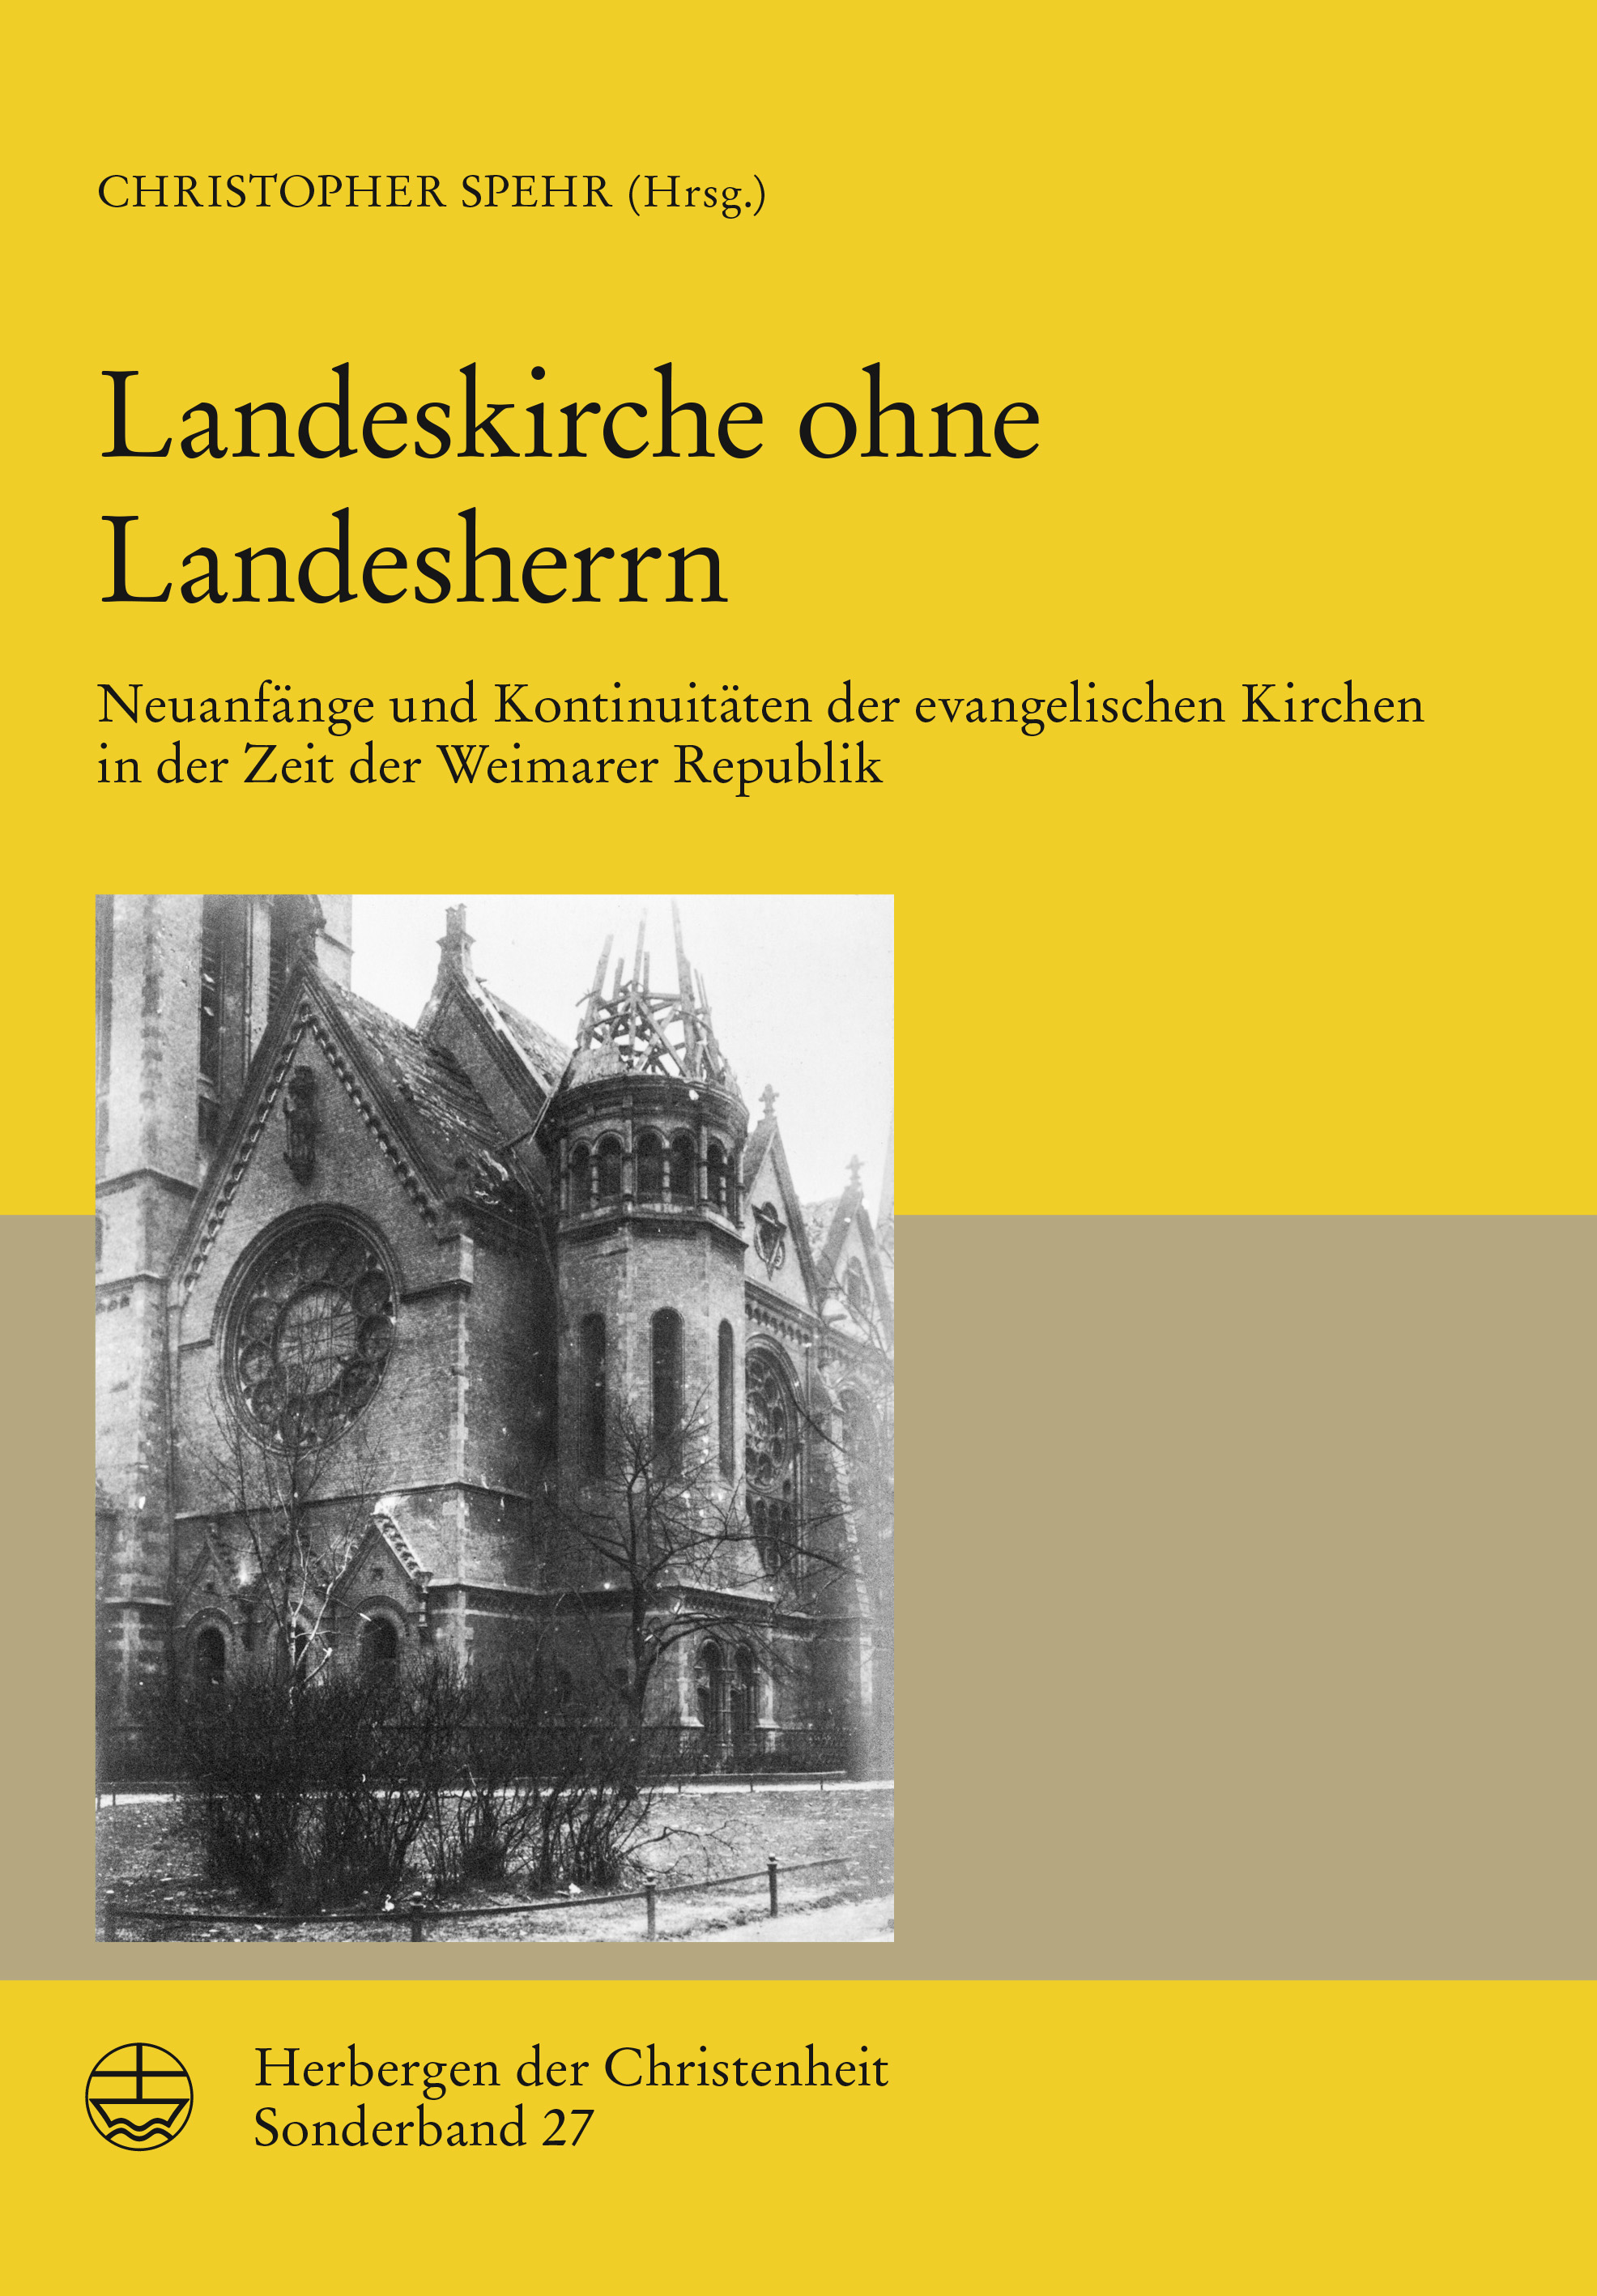 eva cover 06870 Herbergen SB 27 Spehr Landeskirche ohne Landesherrn1